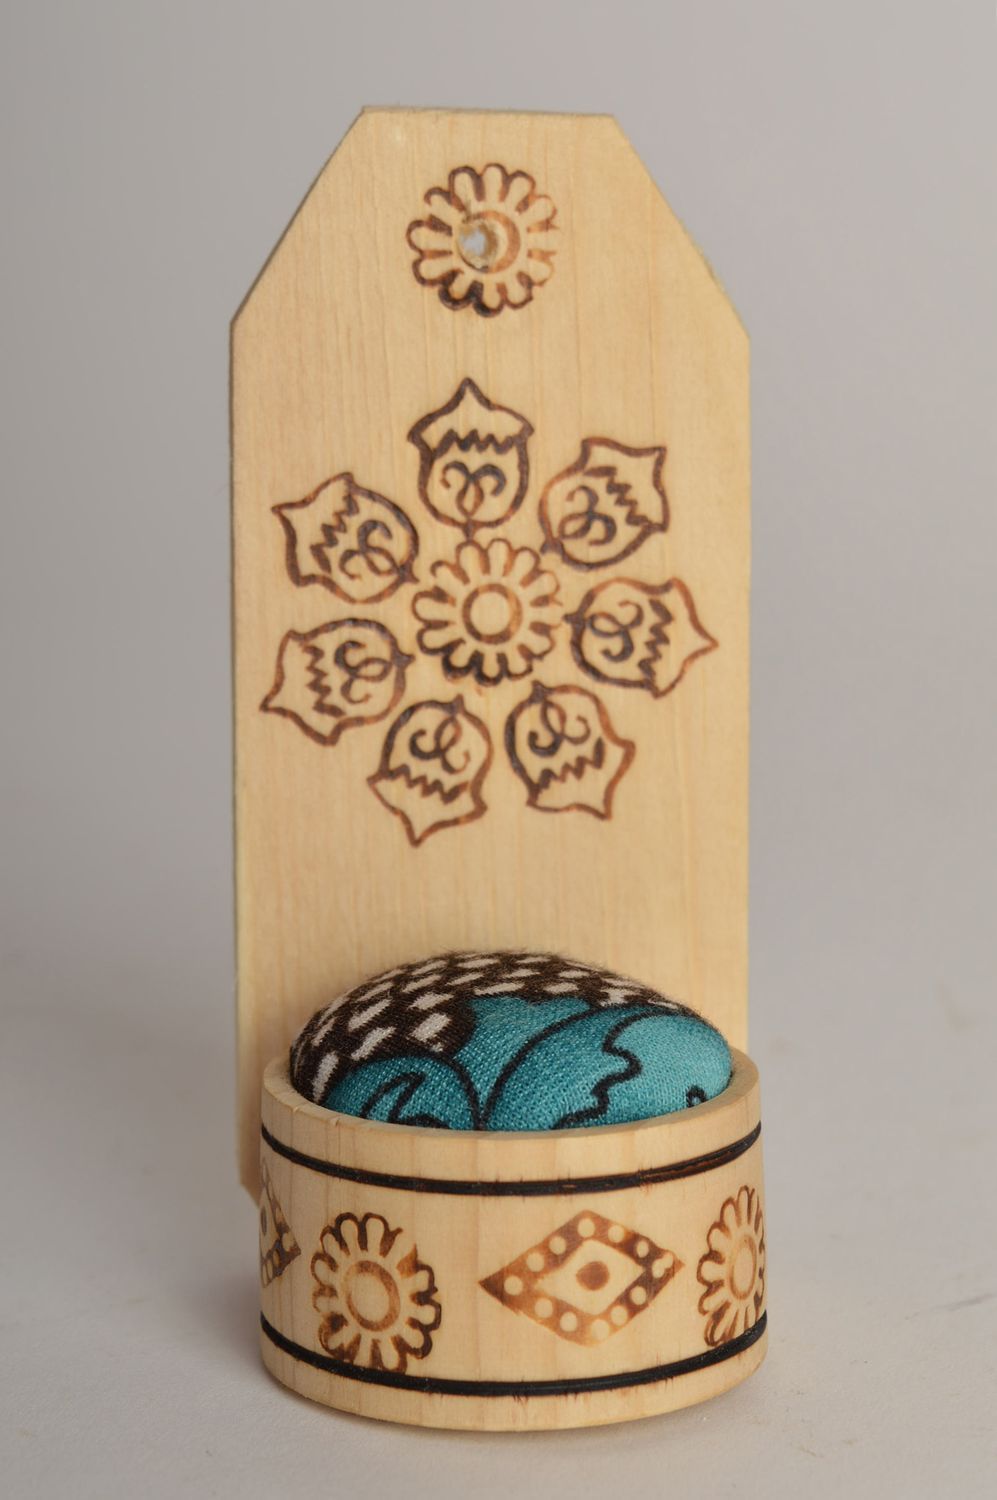 Unusual handmade pin cushion wooden pincushion wood craft needlework ideas photo 3